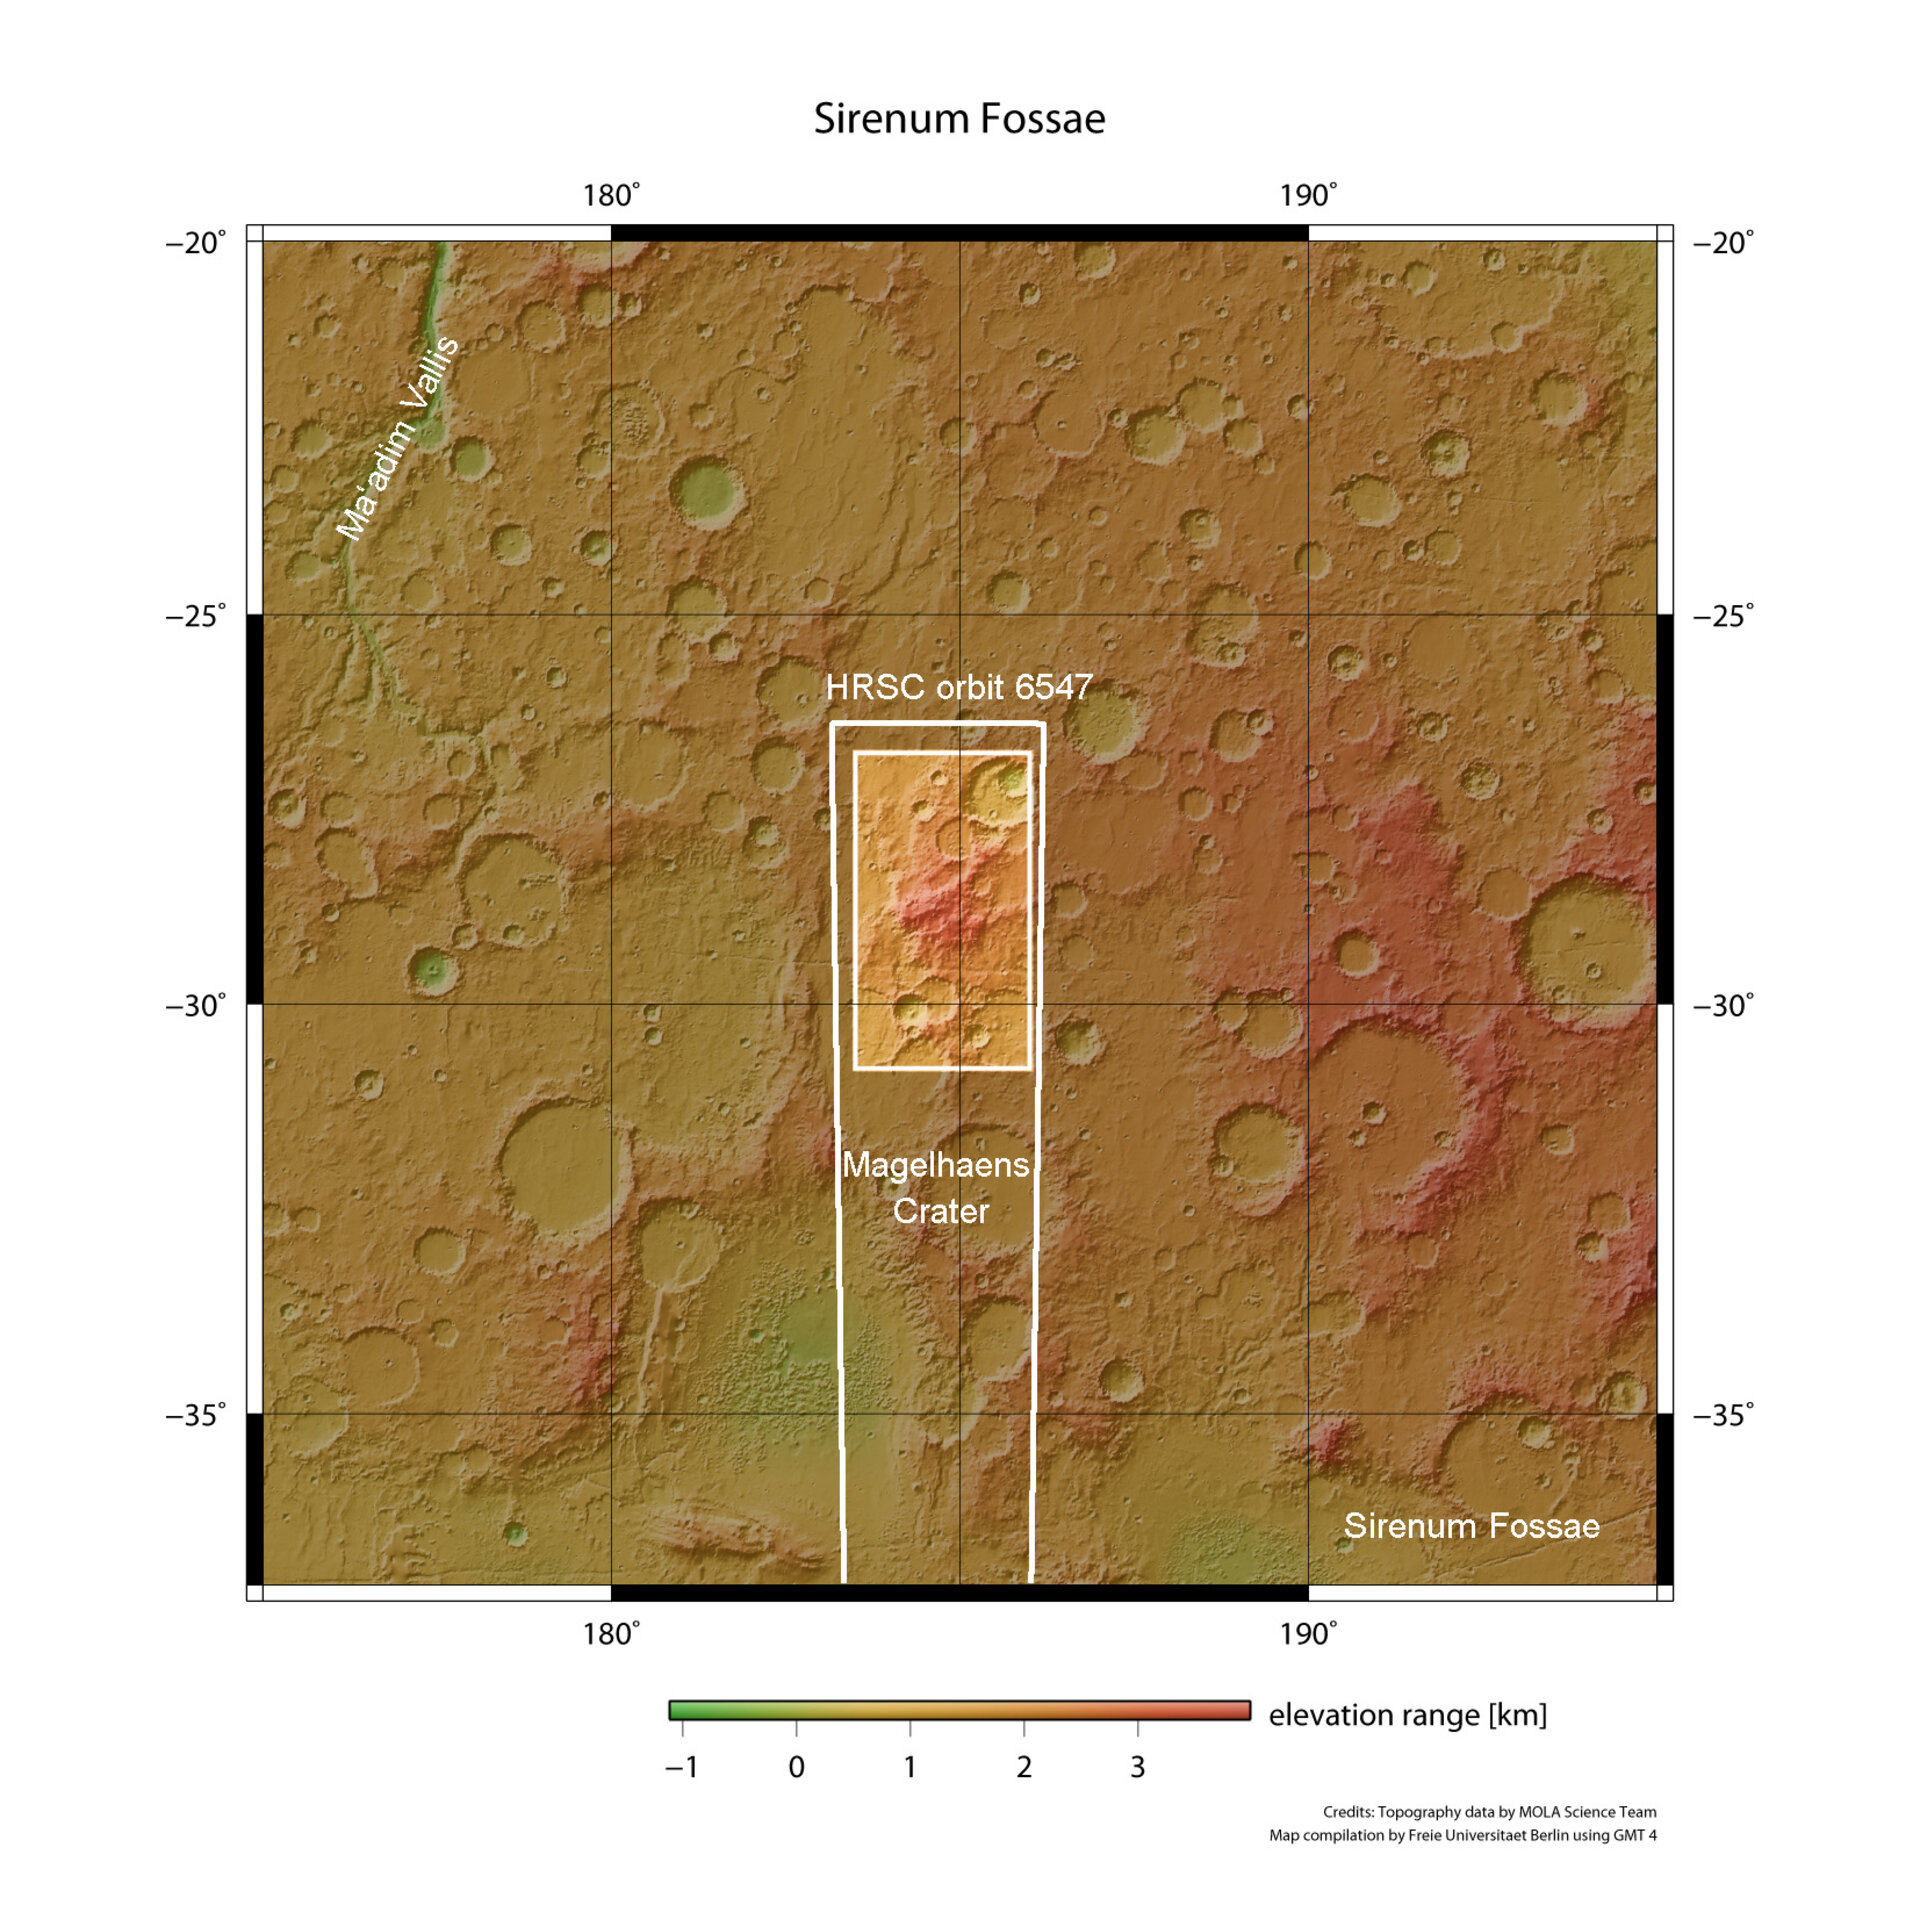 Part of the Sirenum Fossae region captured by HRSC on Mars Express orbit 6547.